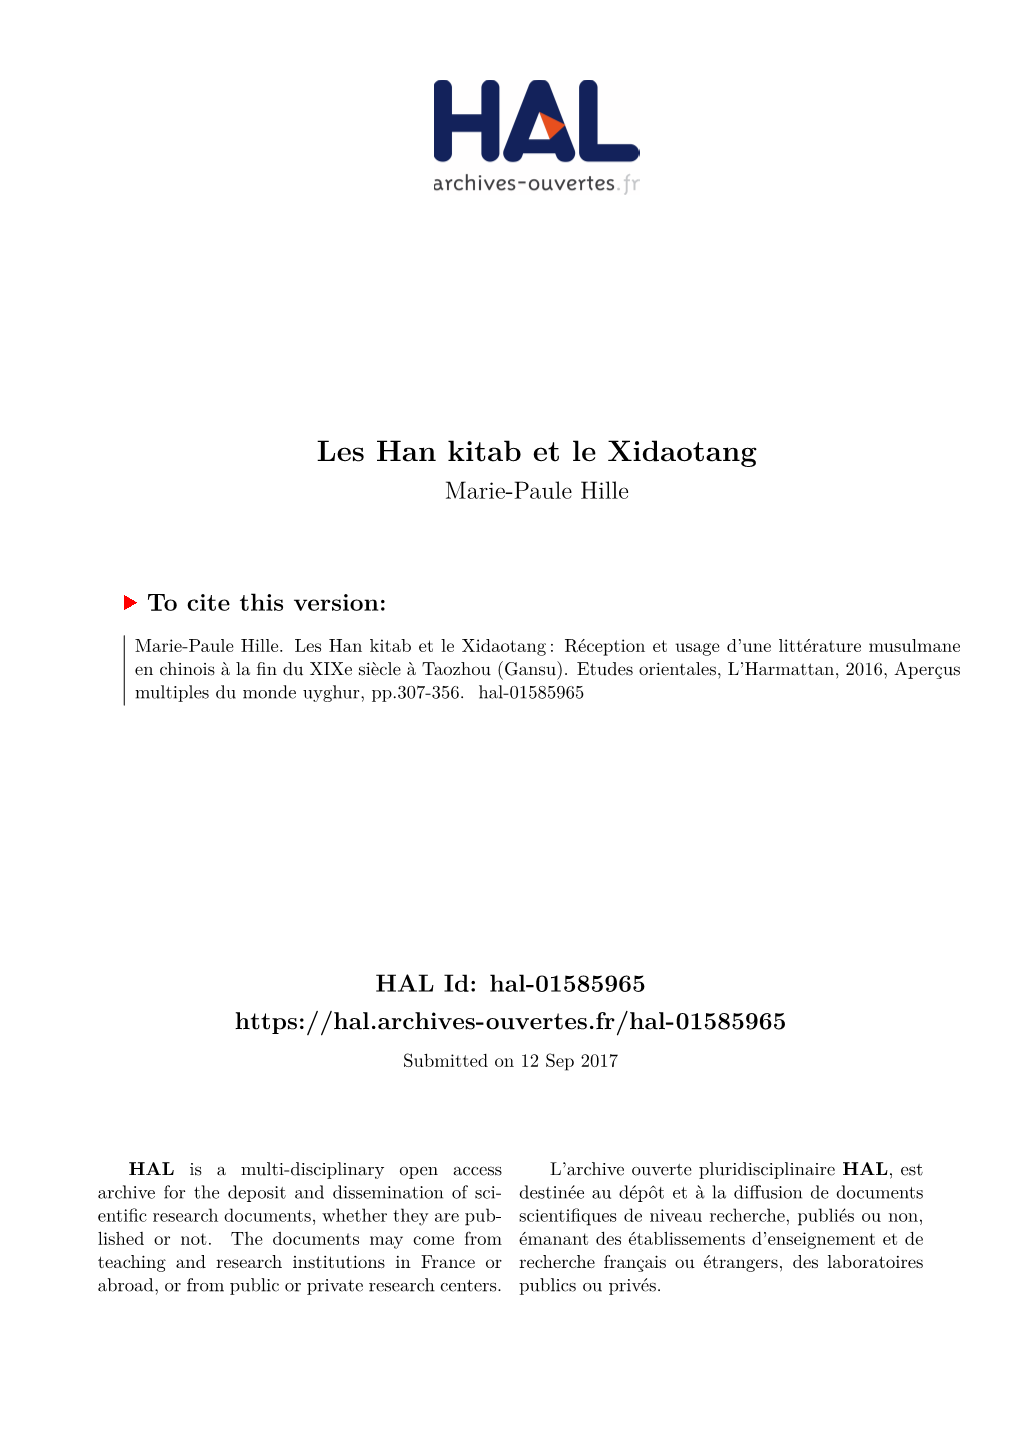 Les Han Kitab Et Le Xidaotang Marie-Paule Hille